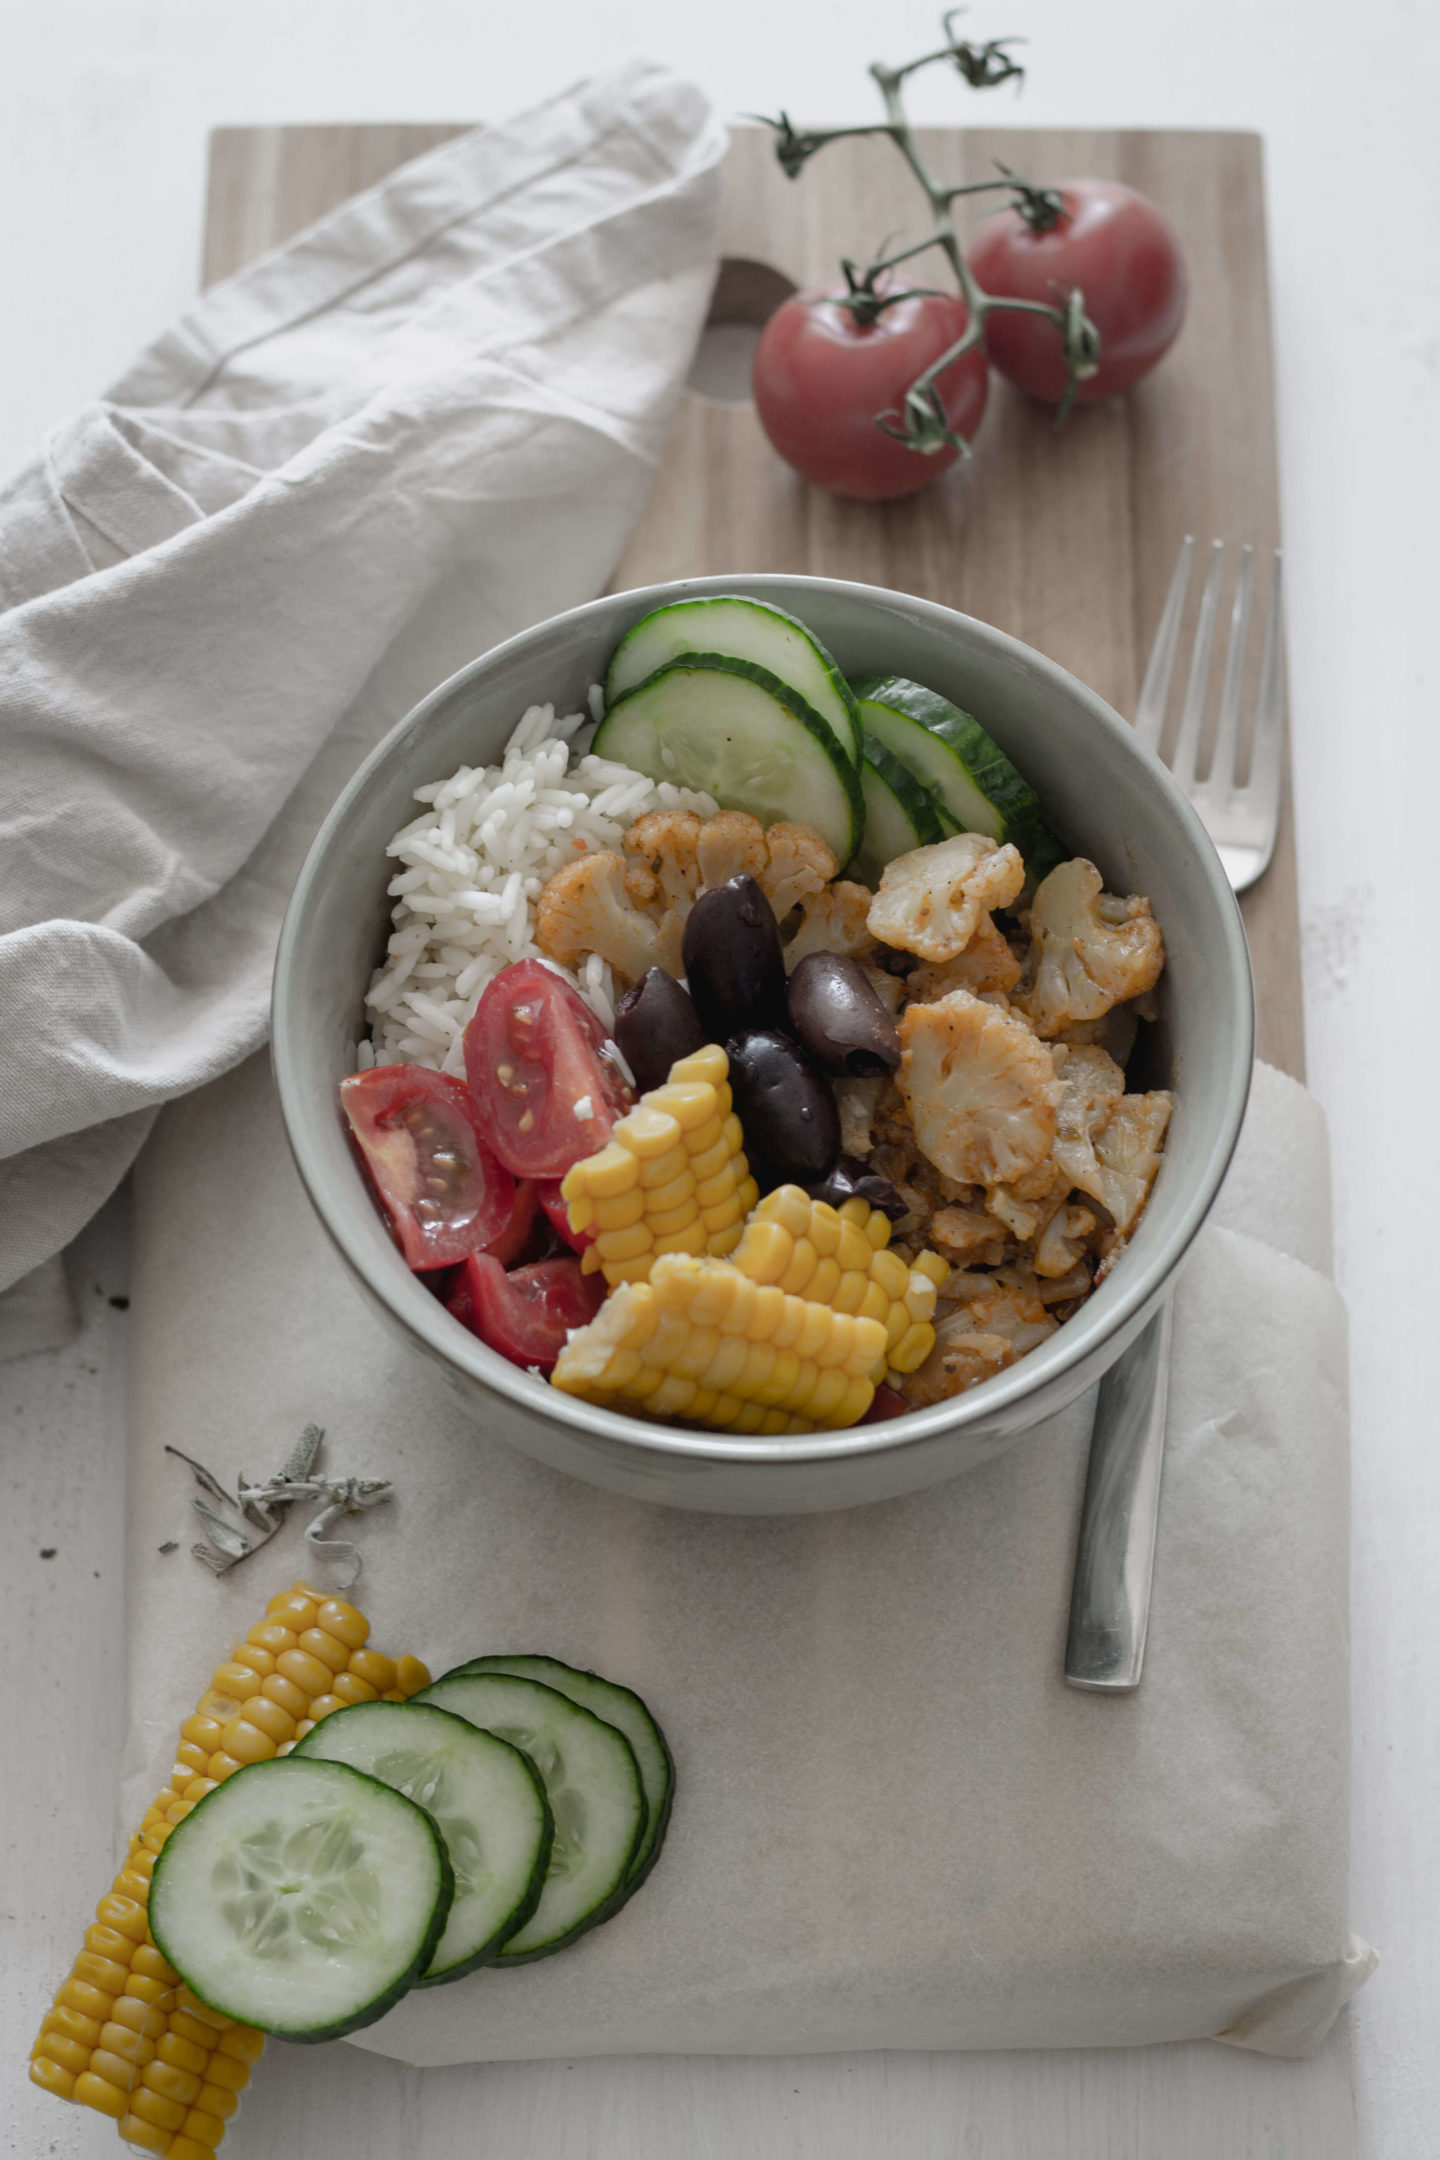 Vegane Karfiol Bowl für Blumenkohl Fans – Gyrospfanne-veganes Gyros-Soulfood-Vegan Kochen -Dein HomeSpa – Food & Lifestyleblog aus dem Mostviertel